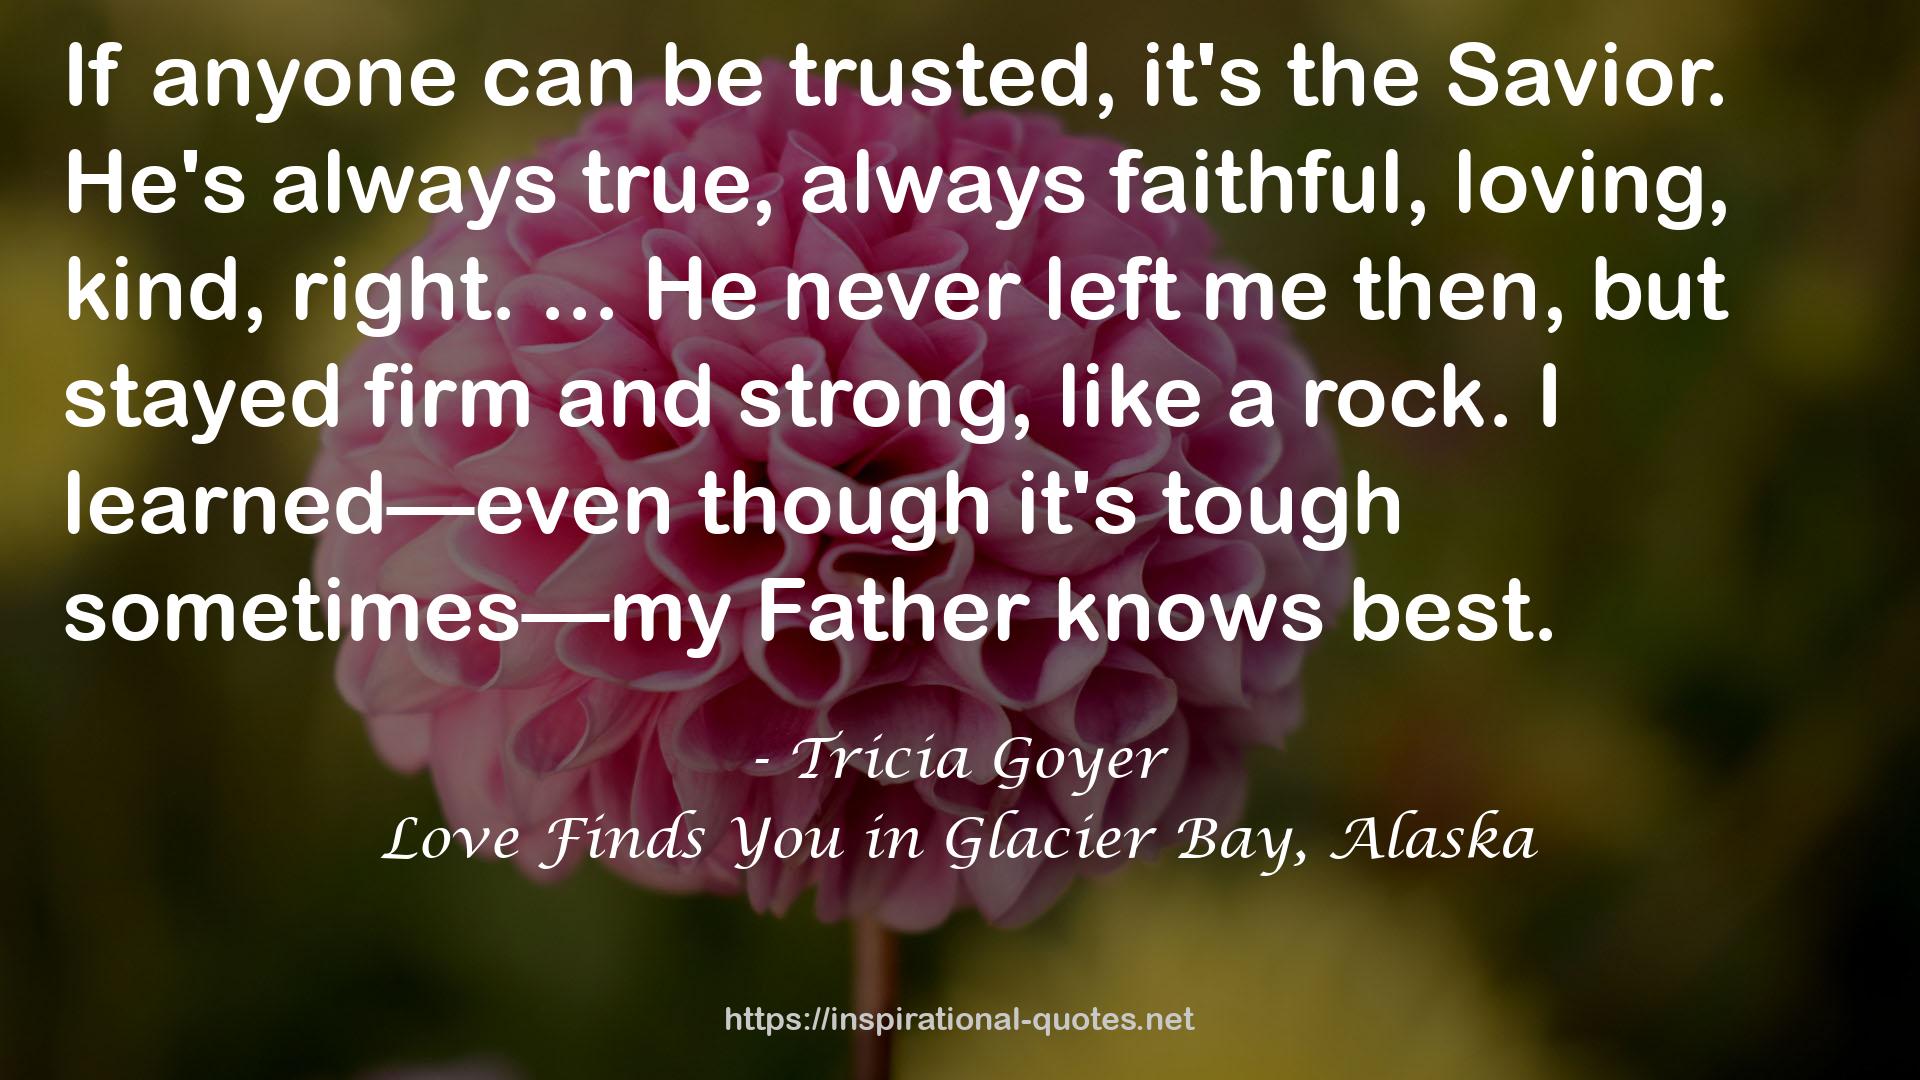 Love Finds You in Glacier Bay, Alaska QUOTES